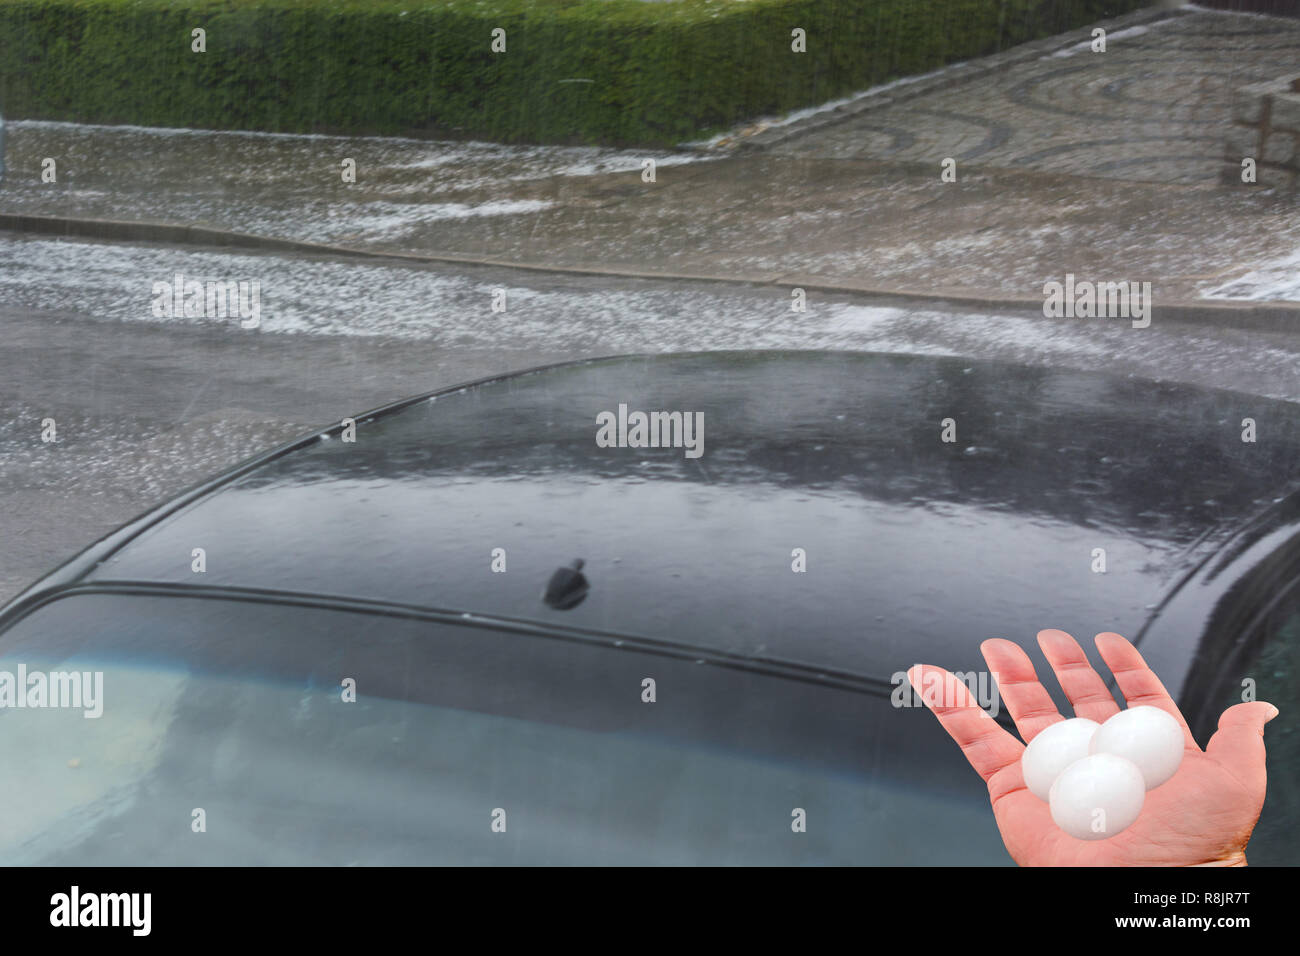 Big hail ice balls on car hood after a heavy hail storm Stock Photo